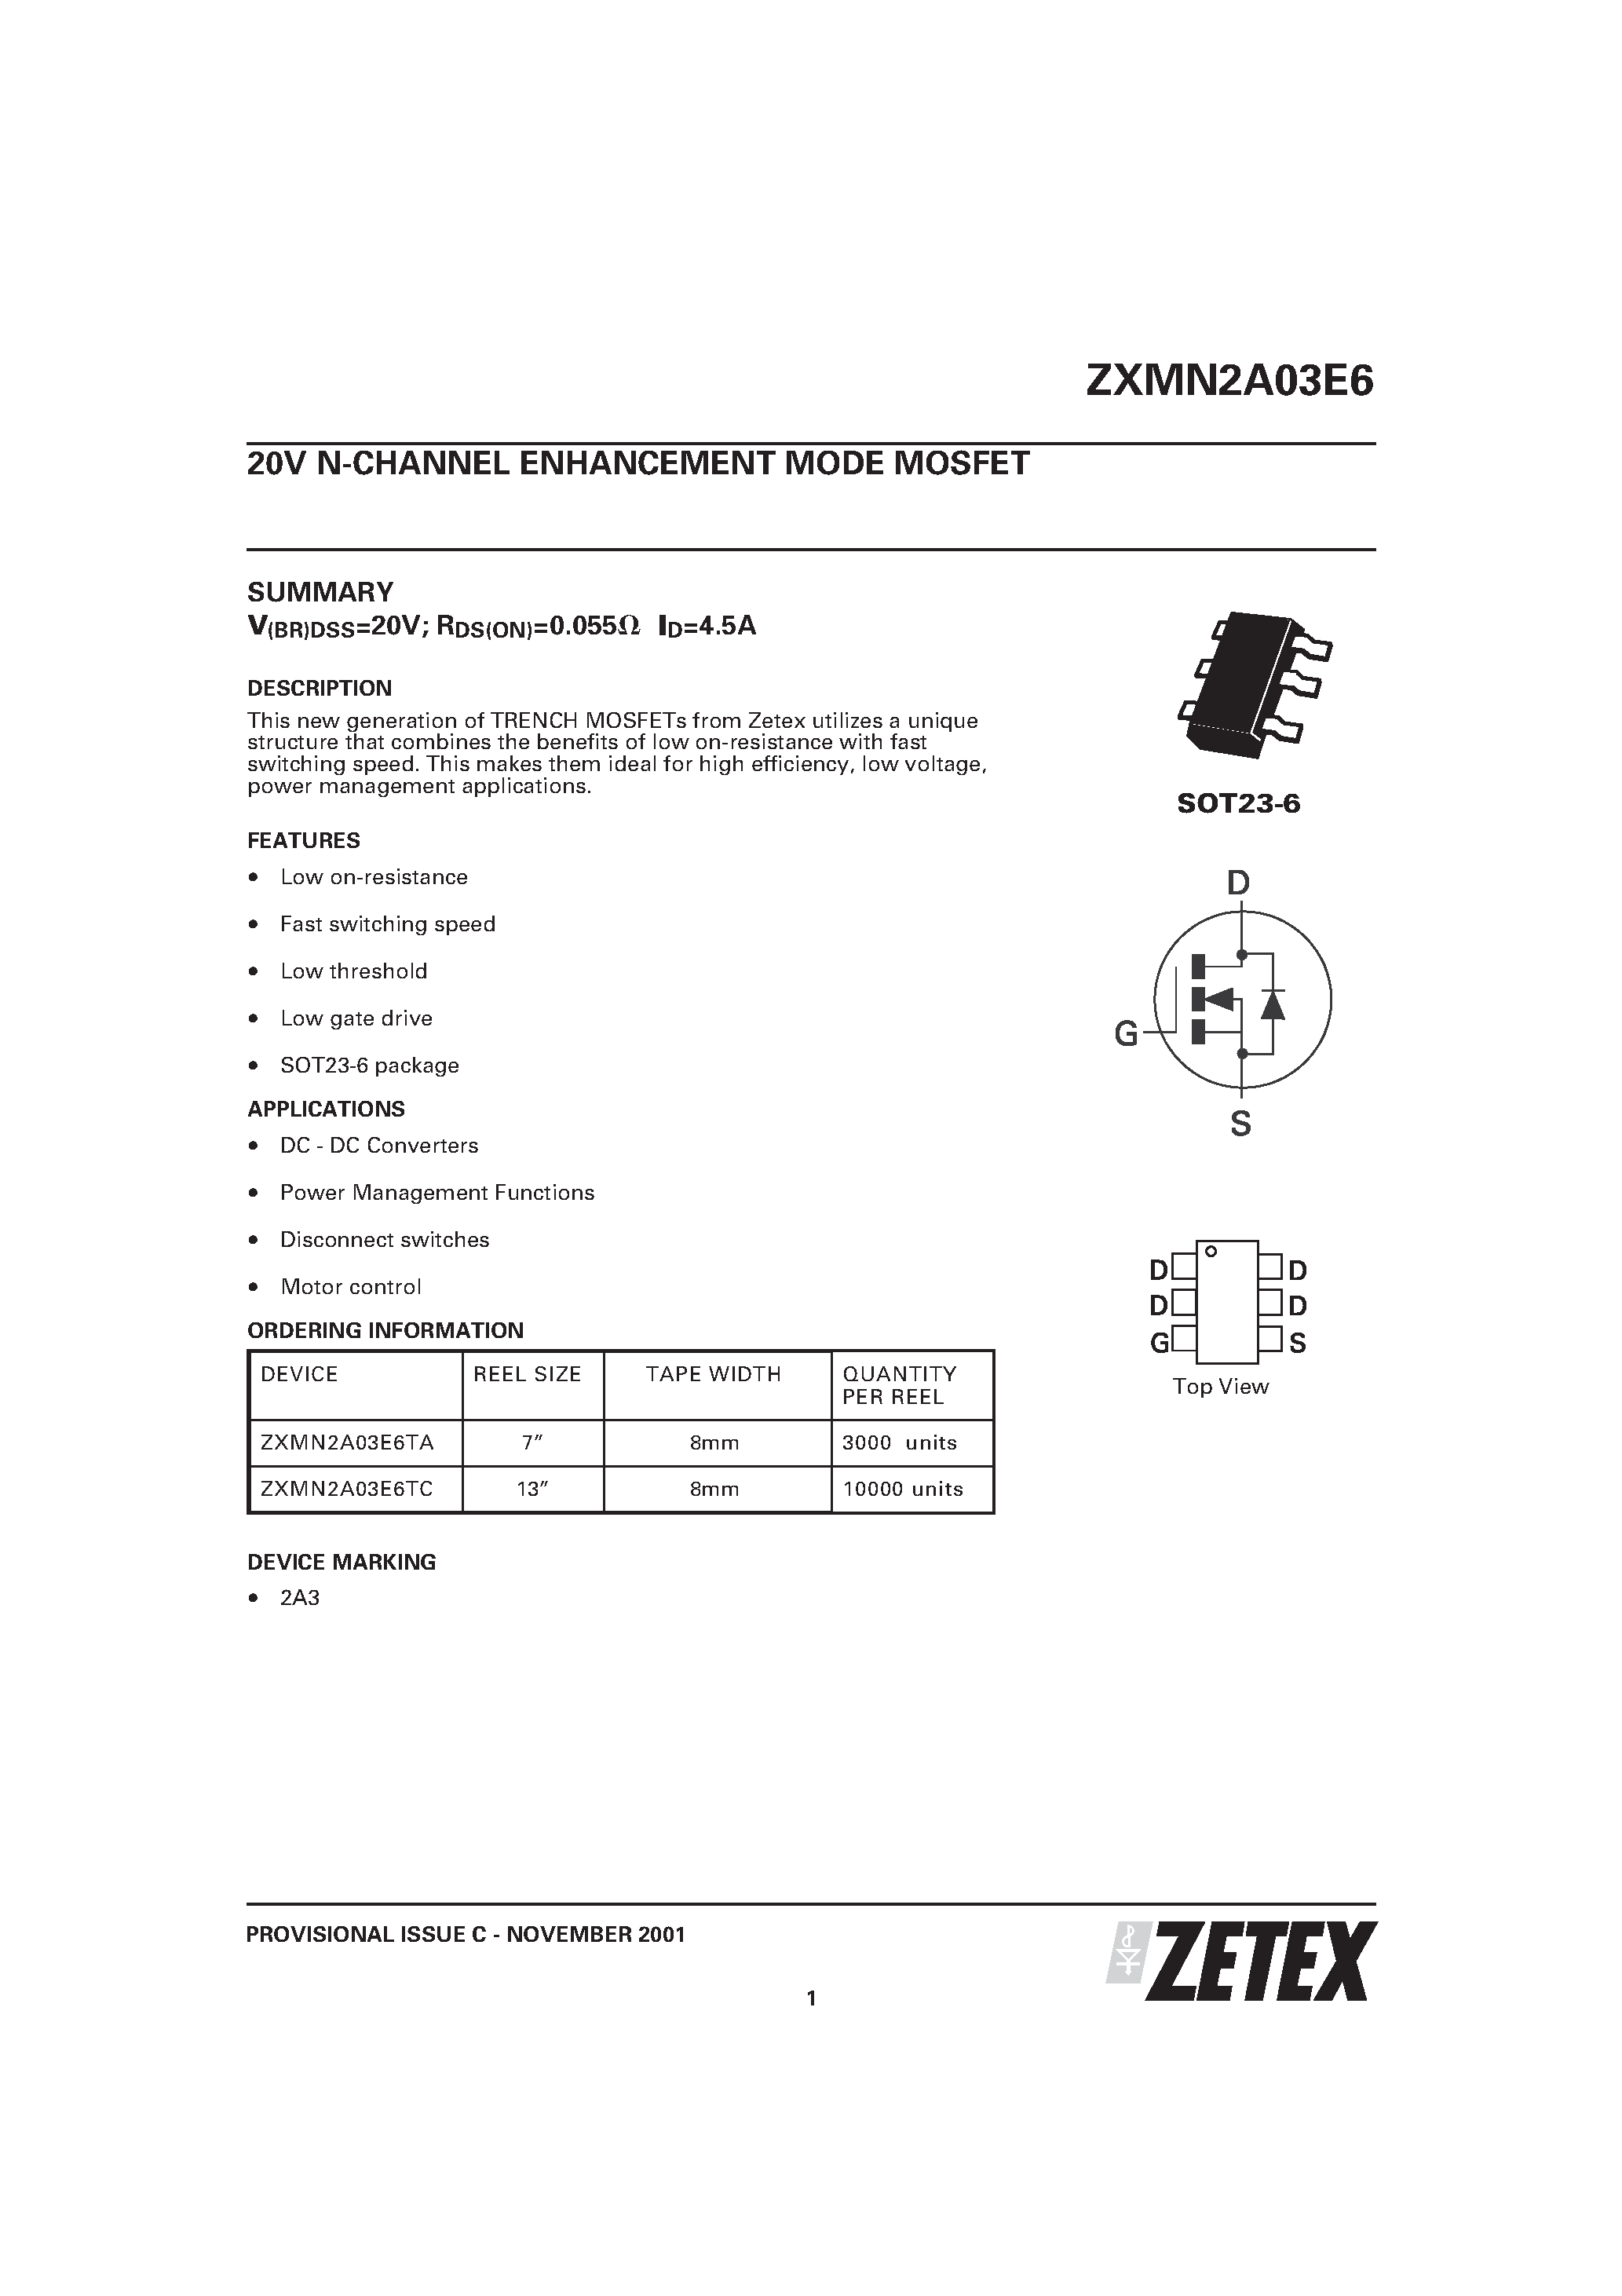 Datasheet ZXMN2A03E6 - 20V N-CHANNEL ENHANCEMENT MODE MOSFET page 1